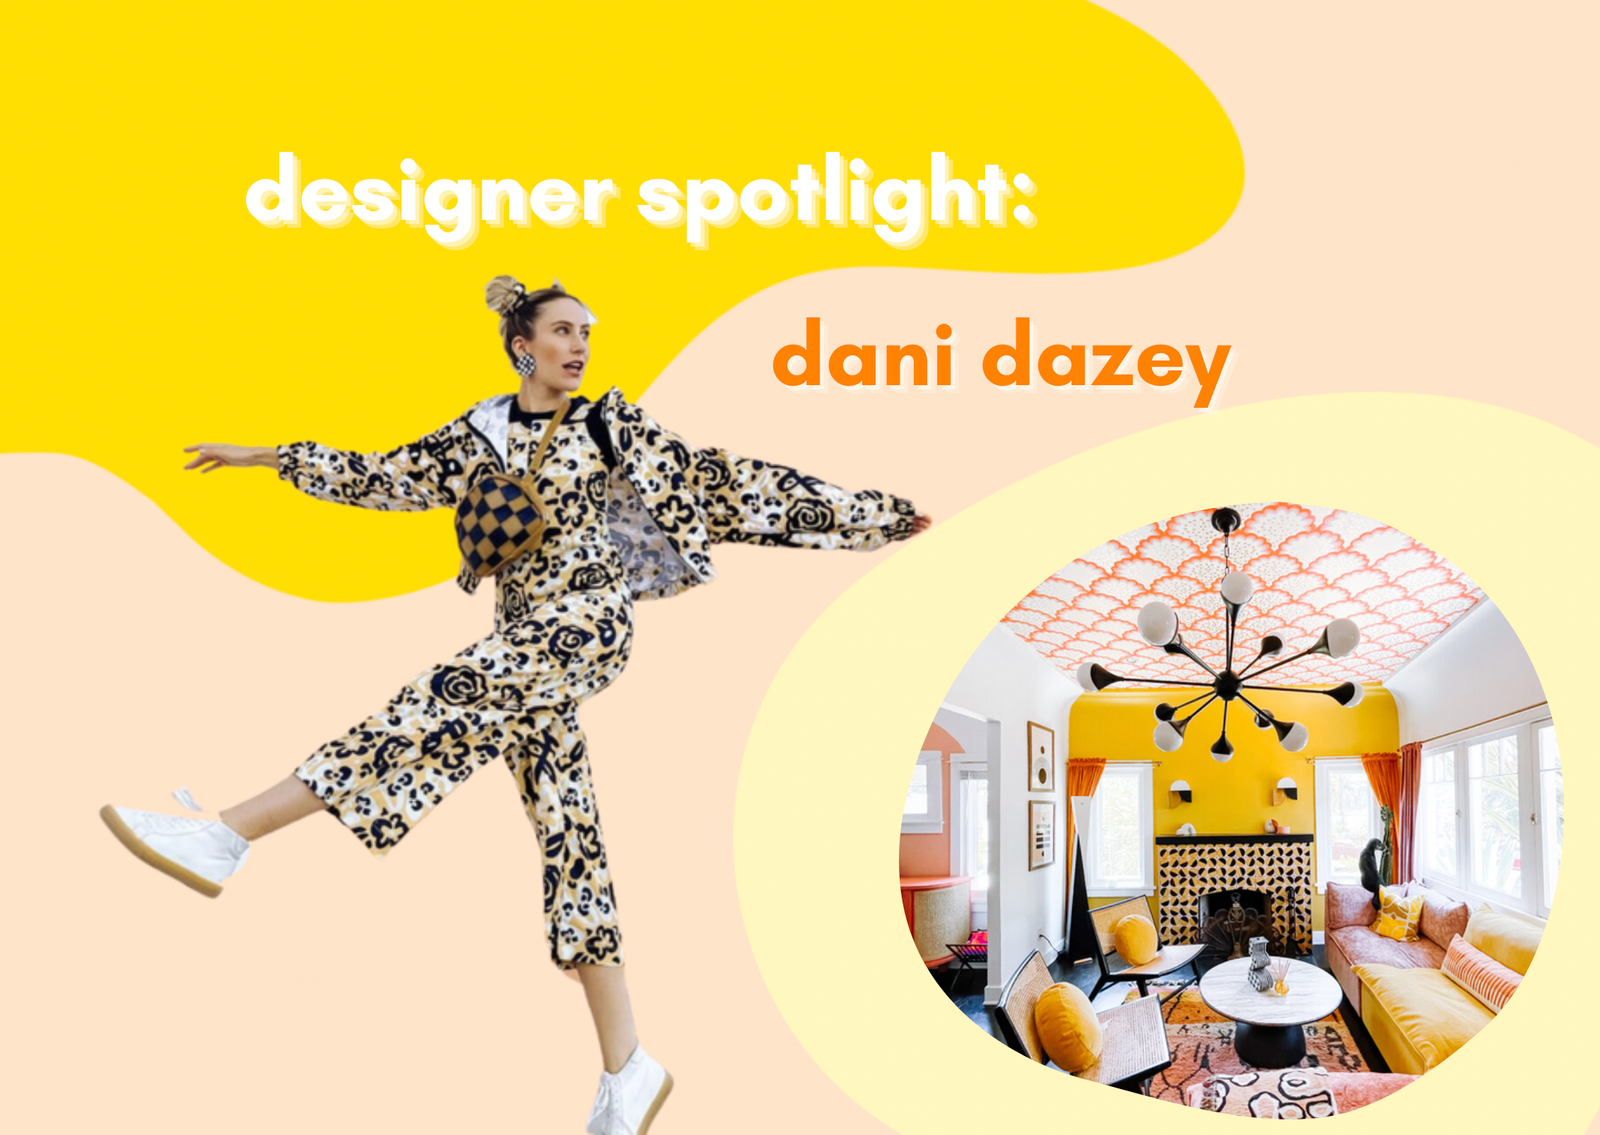 designer spotlight - dani dazey aka dazey den. fun and colorful interior design